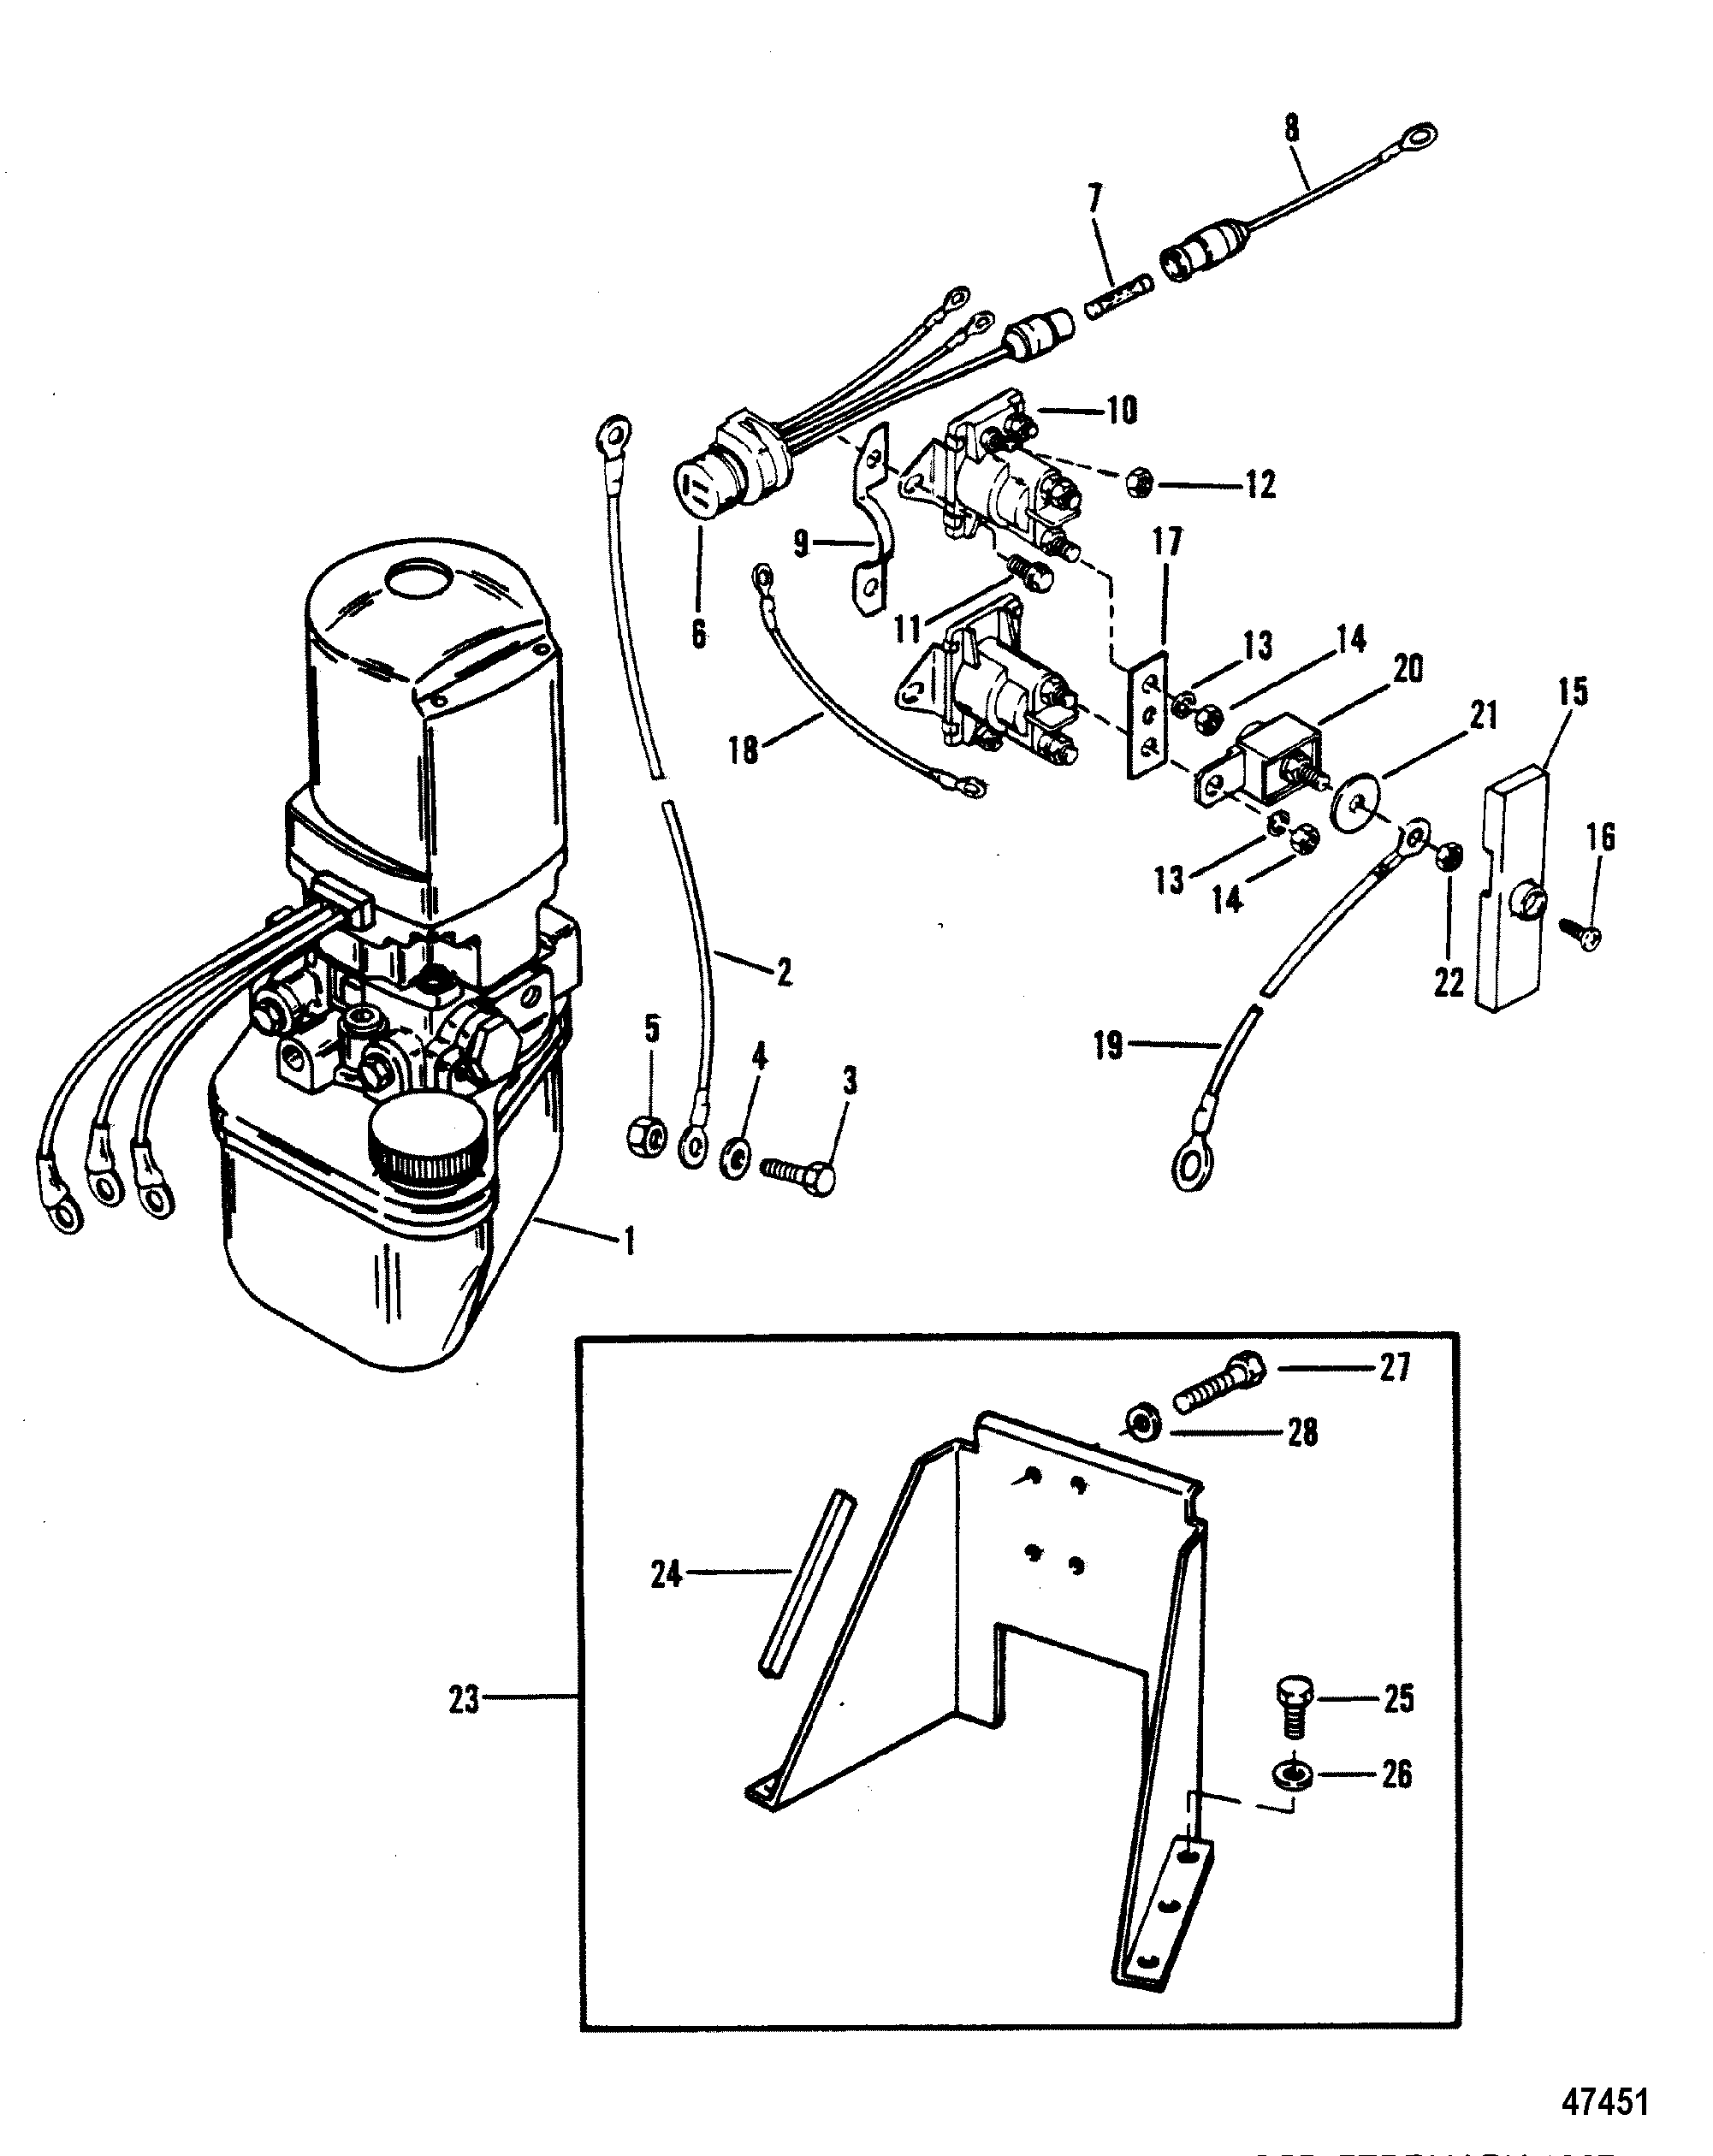 HYDRAULIC PUMP AND BRACKET(OILDYNE PUMP PLASTIC RESERVOIR)